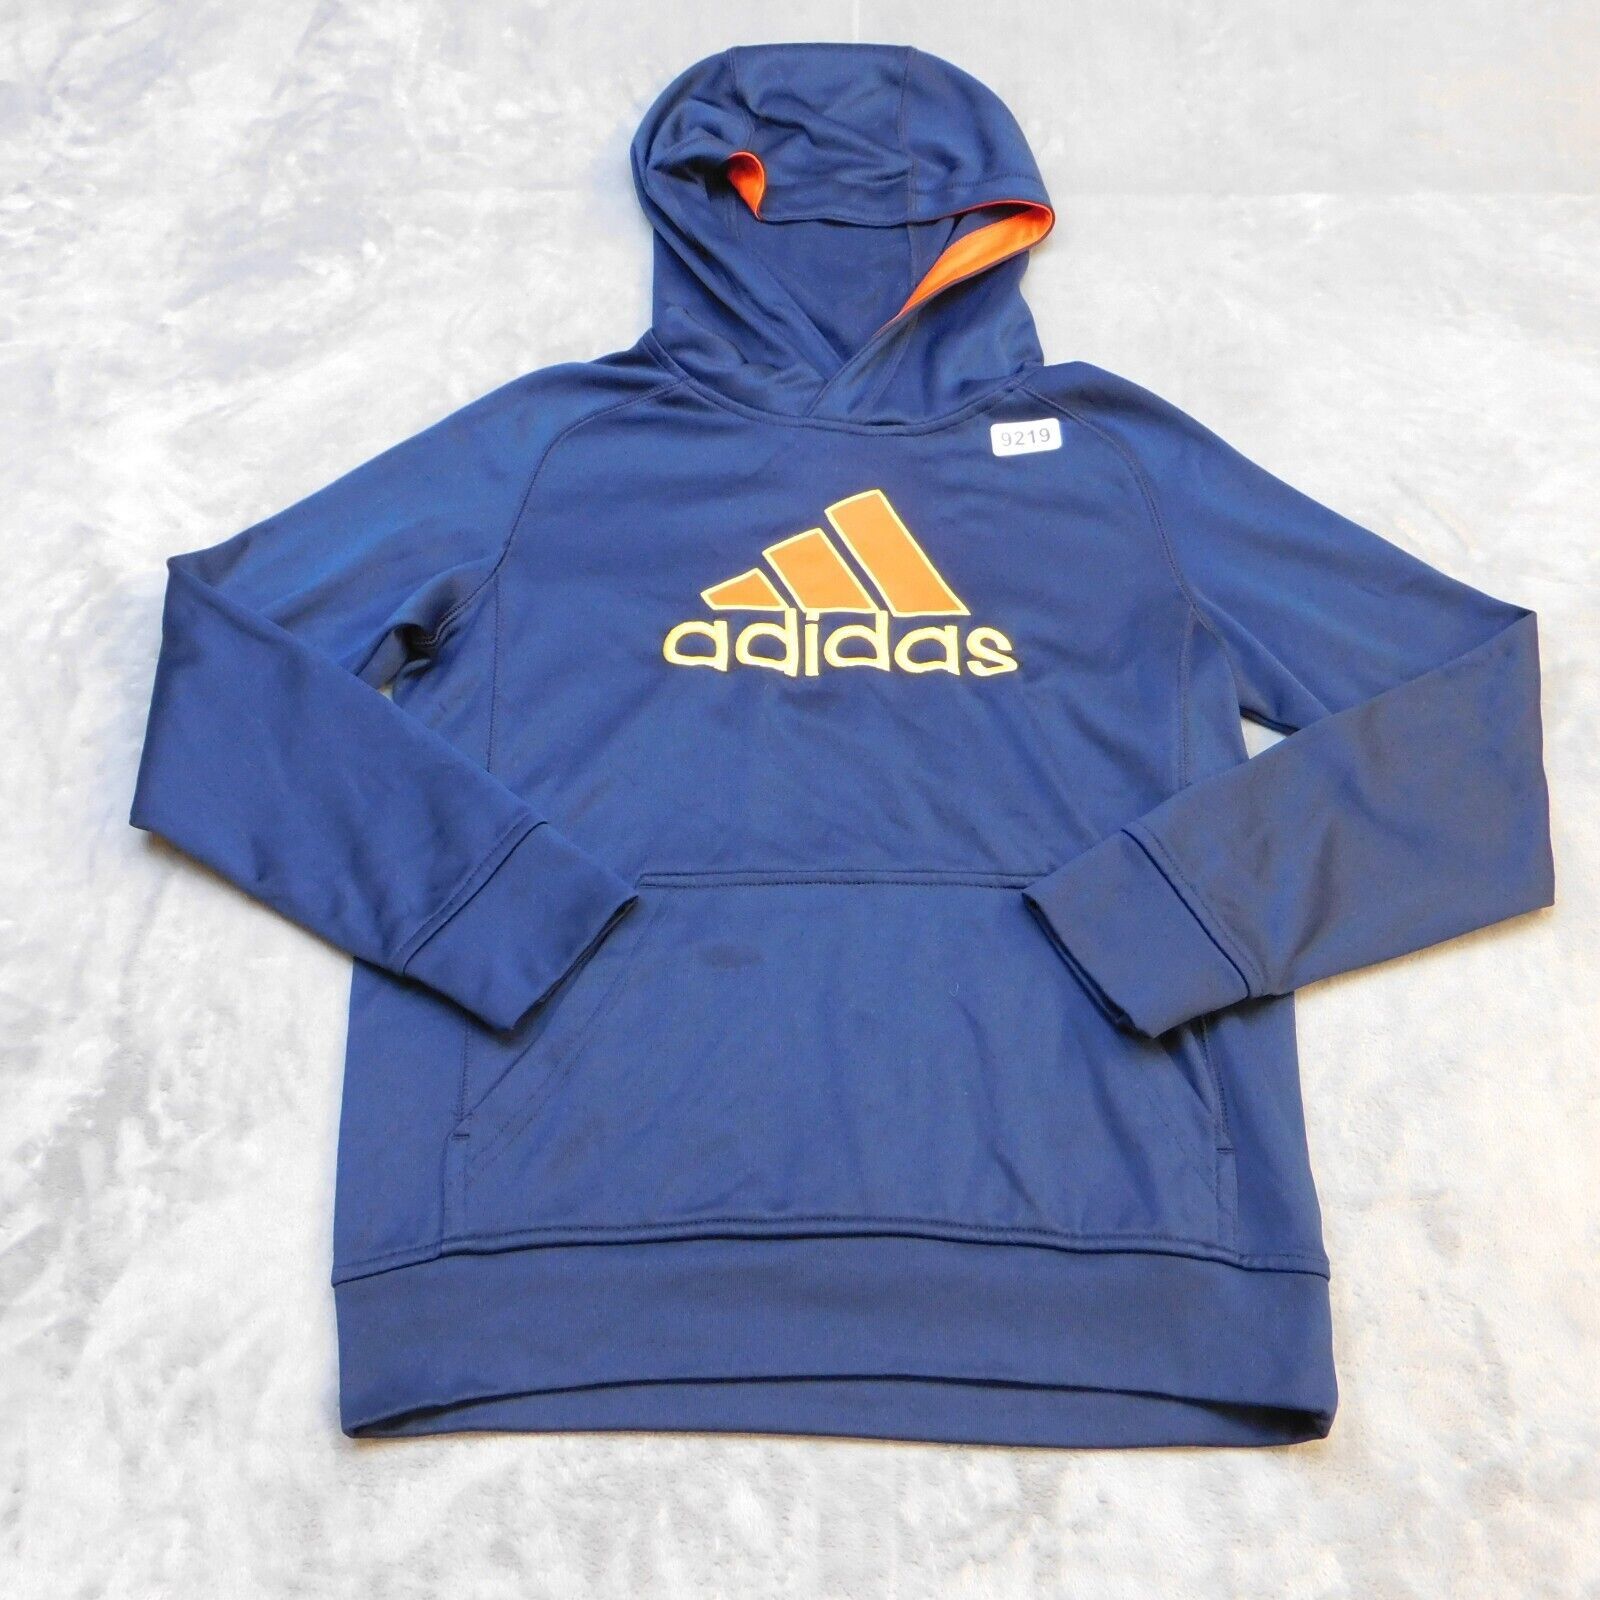 Adidas Hoodie Youth Medium 10/12 Blue Lightweight Casual Sweatshirt Activewear - $17.80